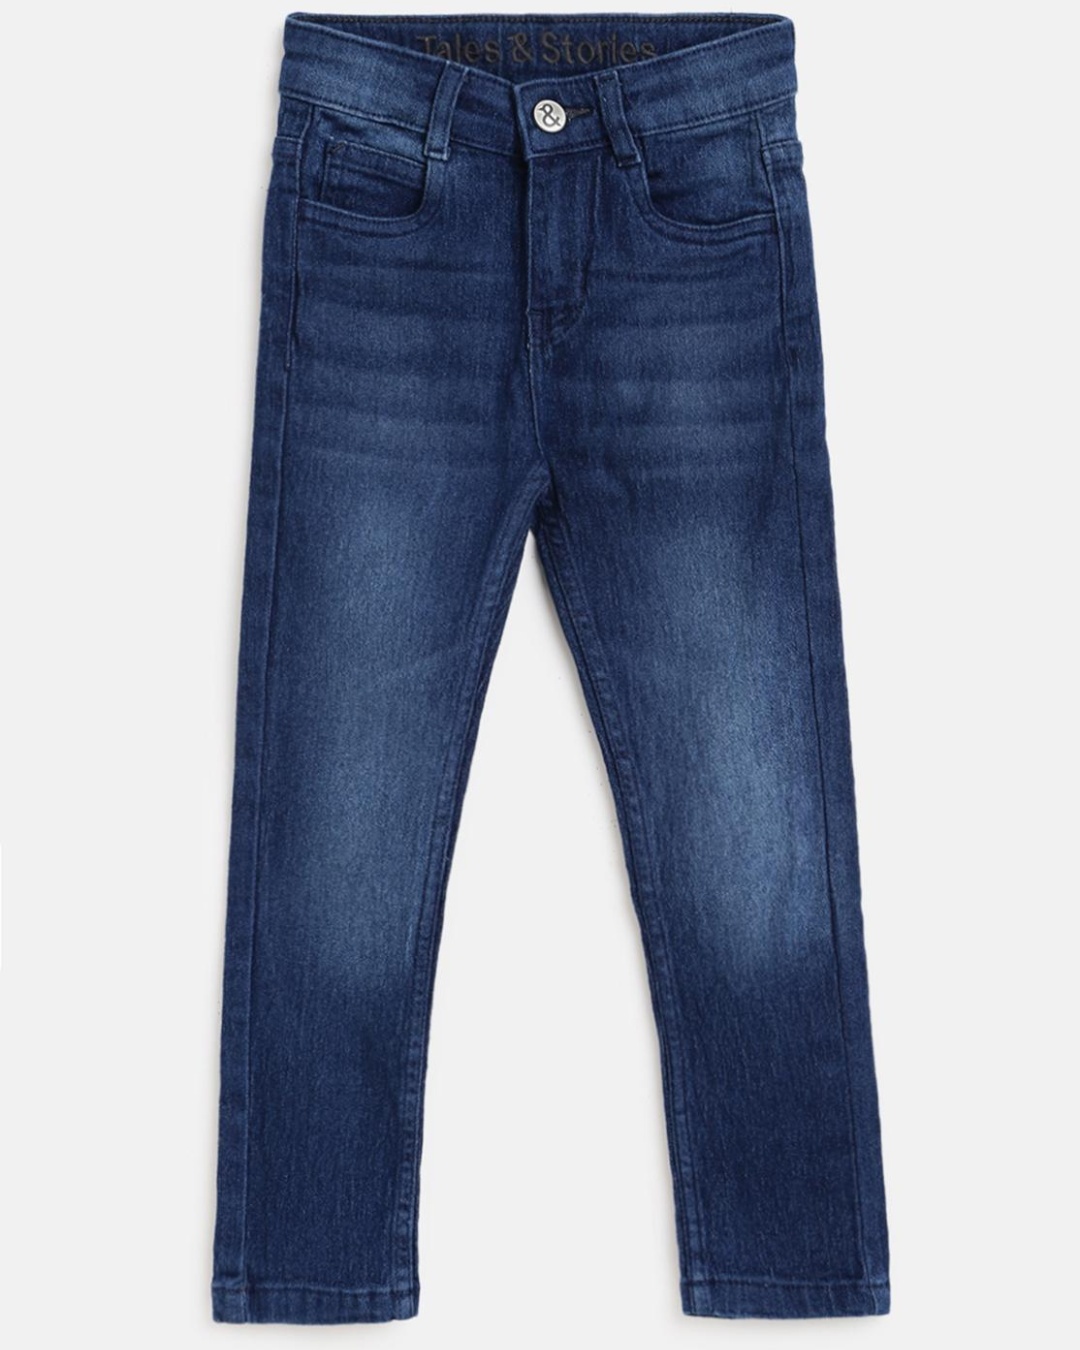 Buy Boys Blue Washed Slim Fit Jeans Online at Bewakoof